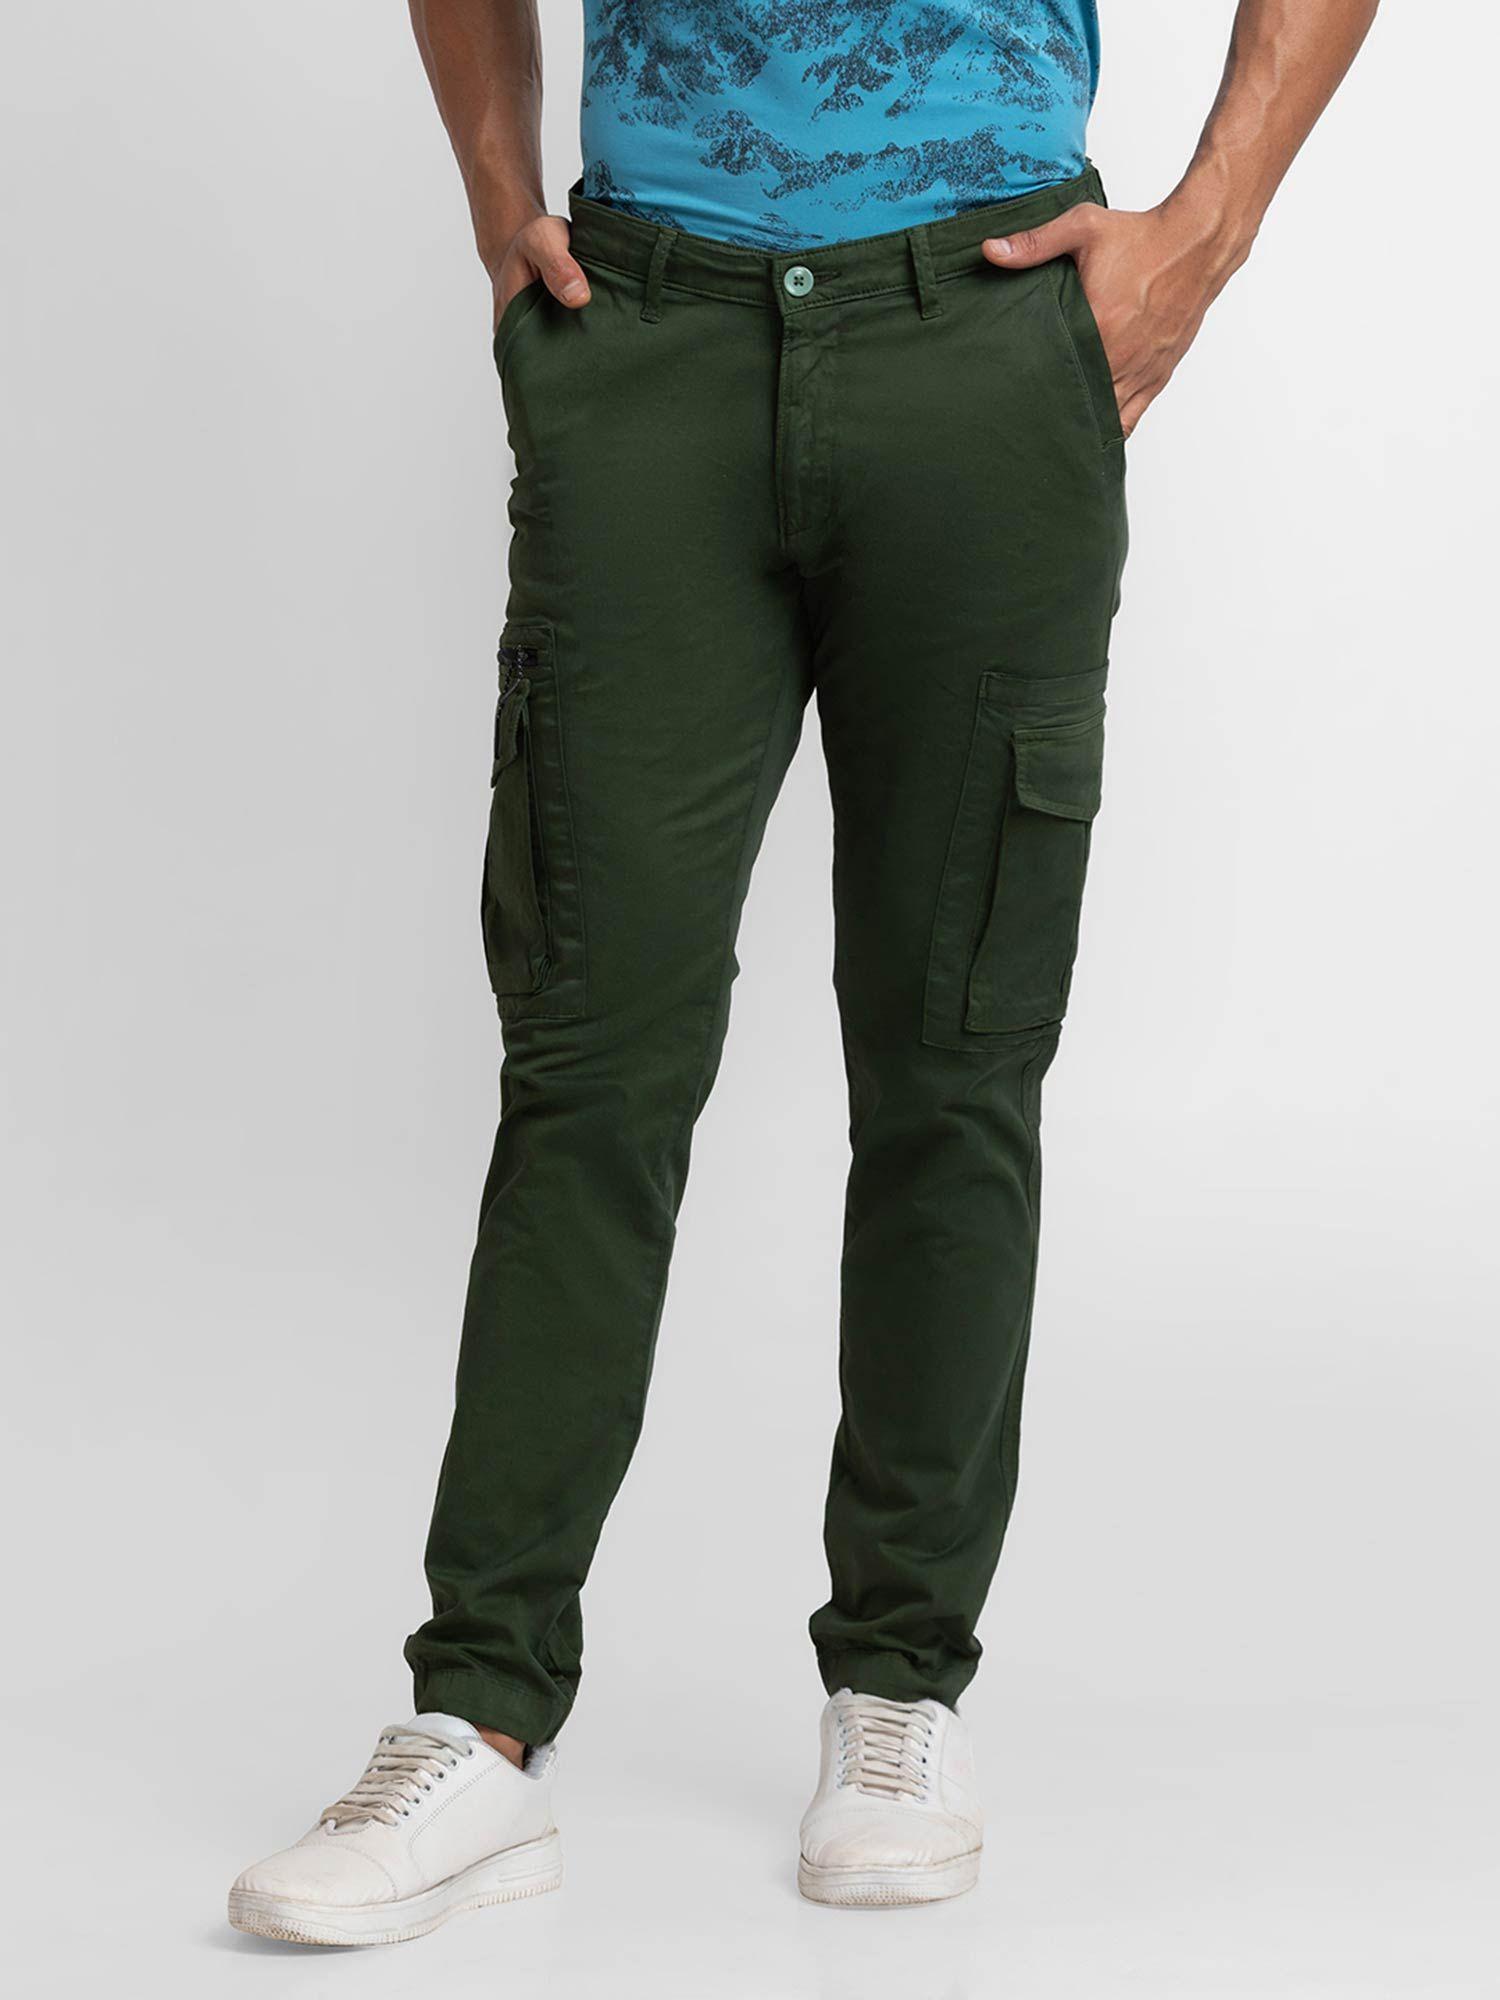 olive green cotton slim fit regular length trousers for men